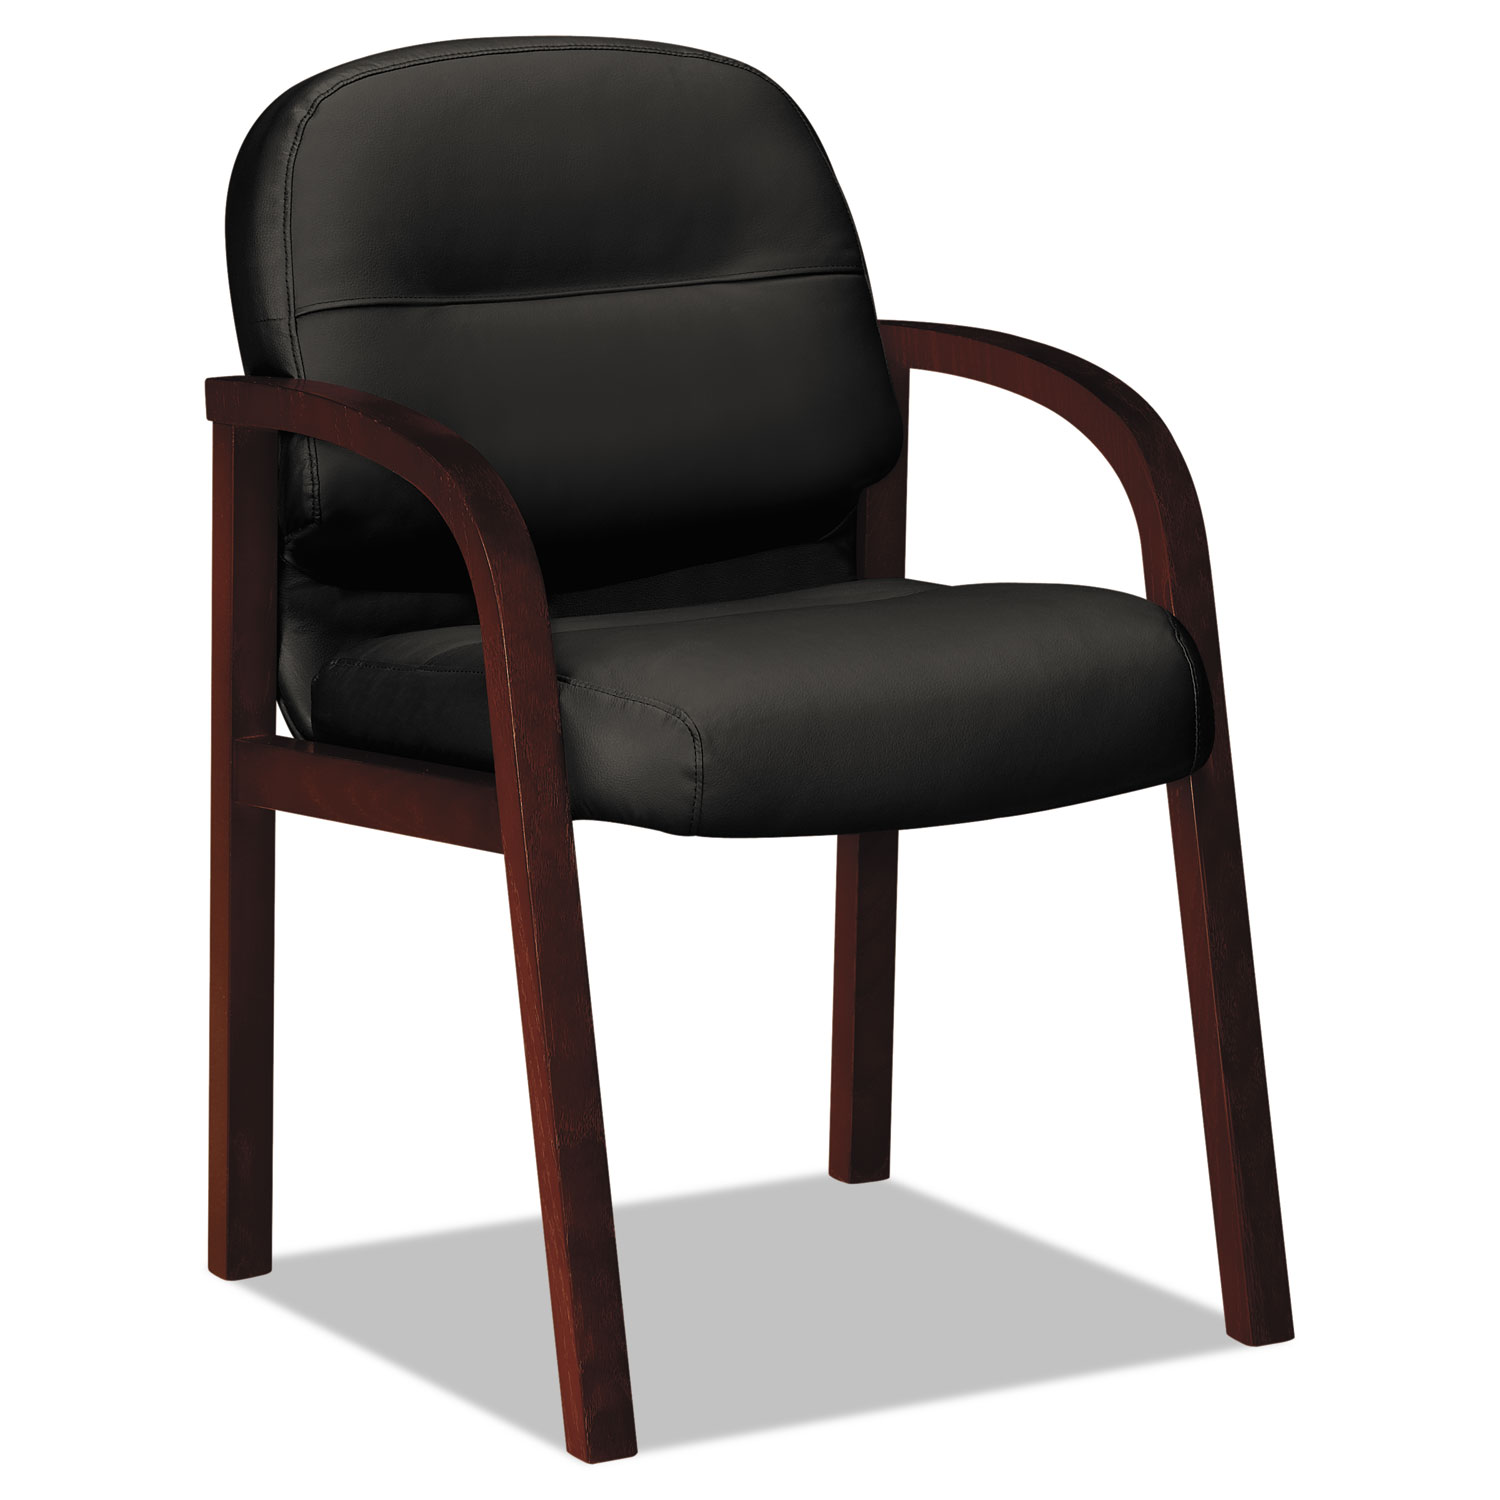  HON H2194.N.SR11 Pillow-Soft 2190 Guest Arm Chair, 23.5 x 27.5 x 35.5, Black Seat/Black Back, Mahogany Base (HON2194NSR11) 